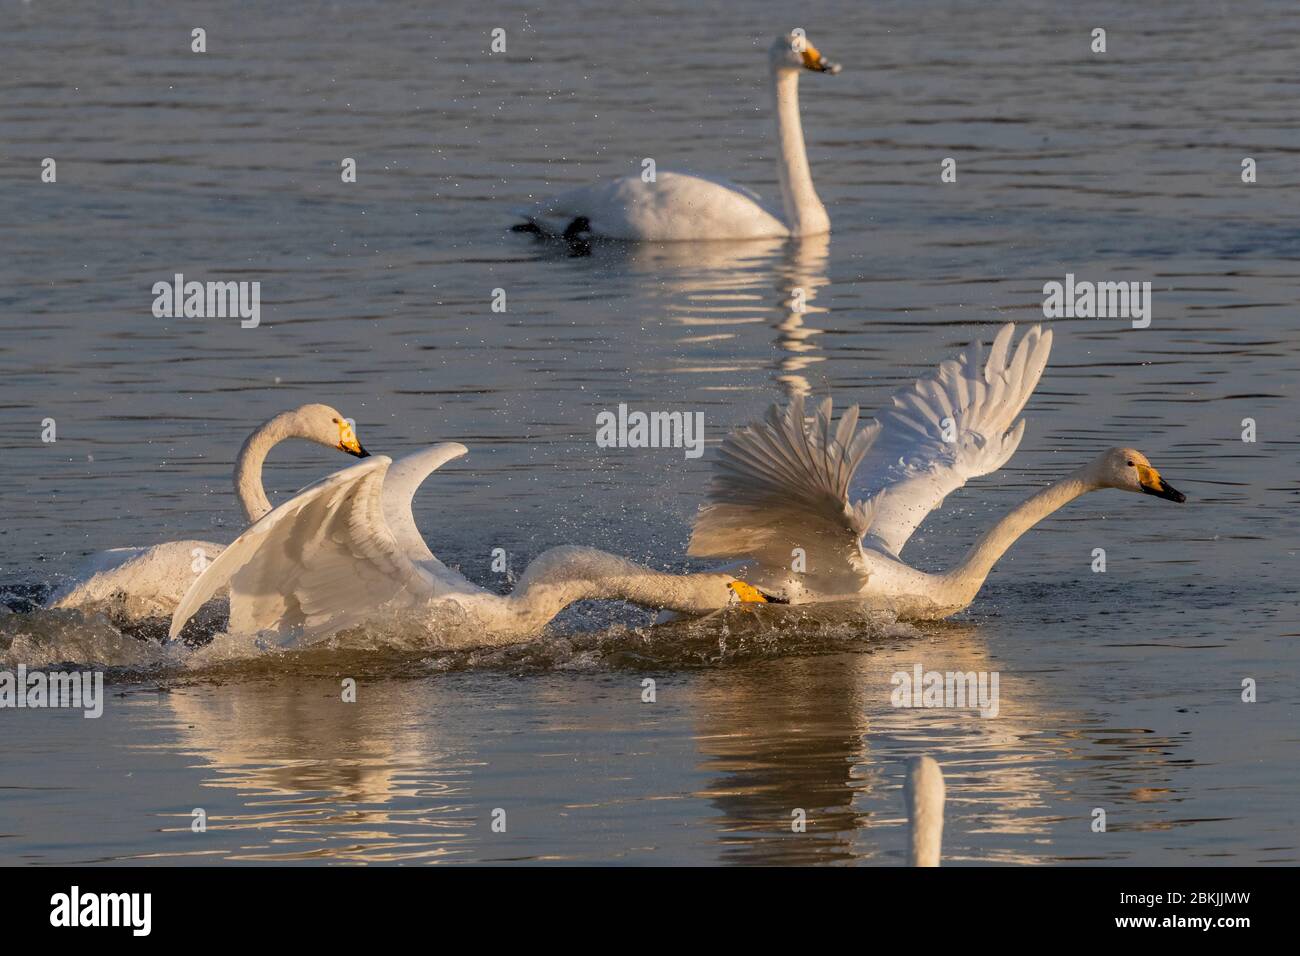 China, Henan ptovince, Sanmenxia, Whooper swan (Cygnus cygnus), Stock Photo